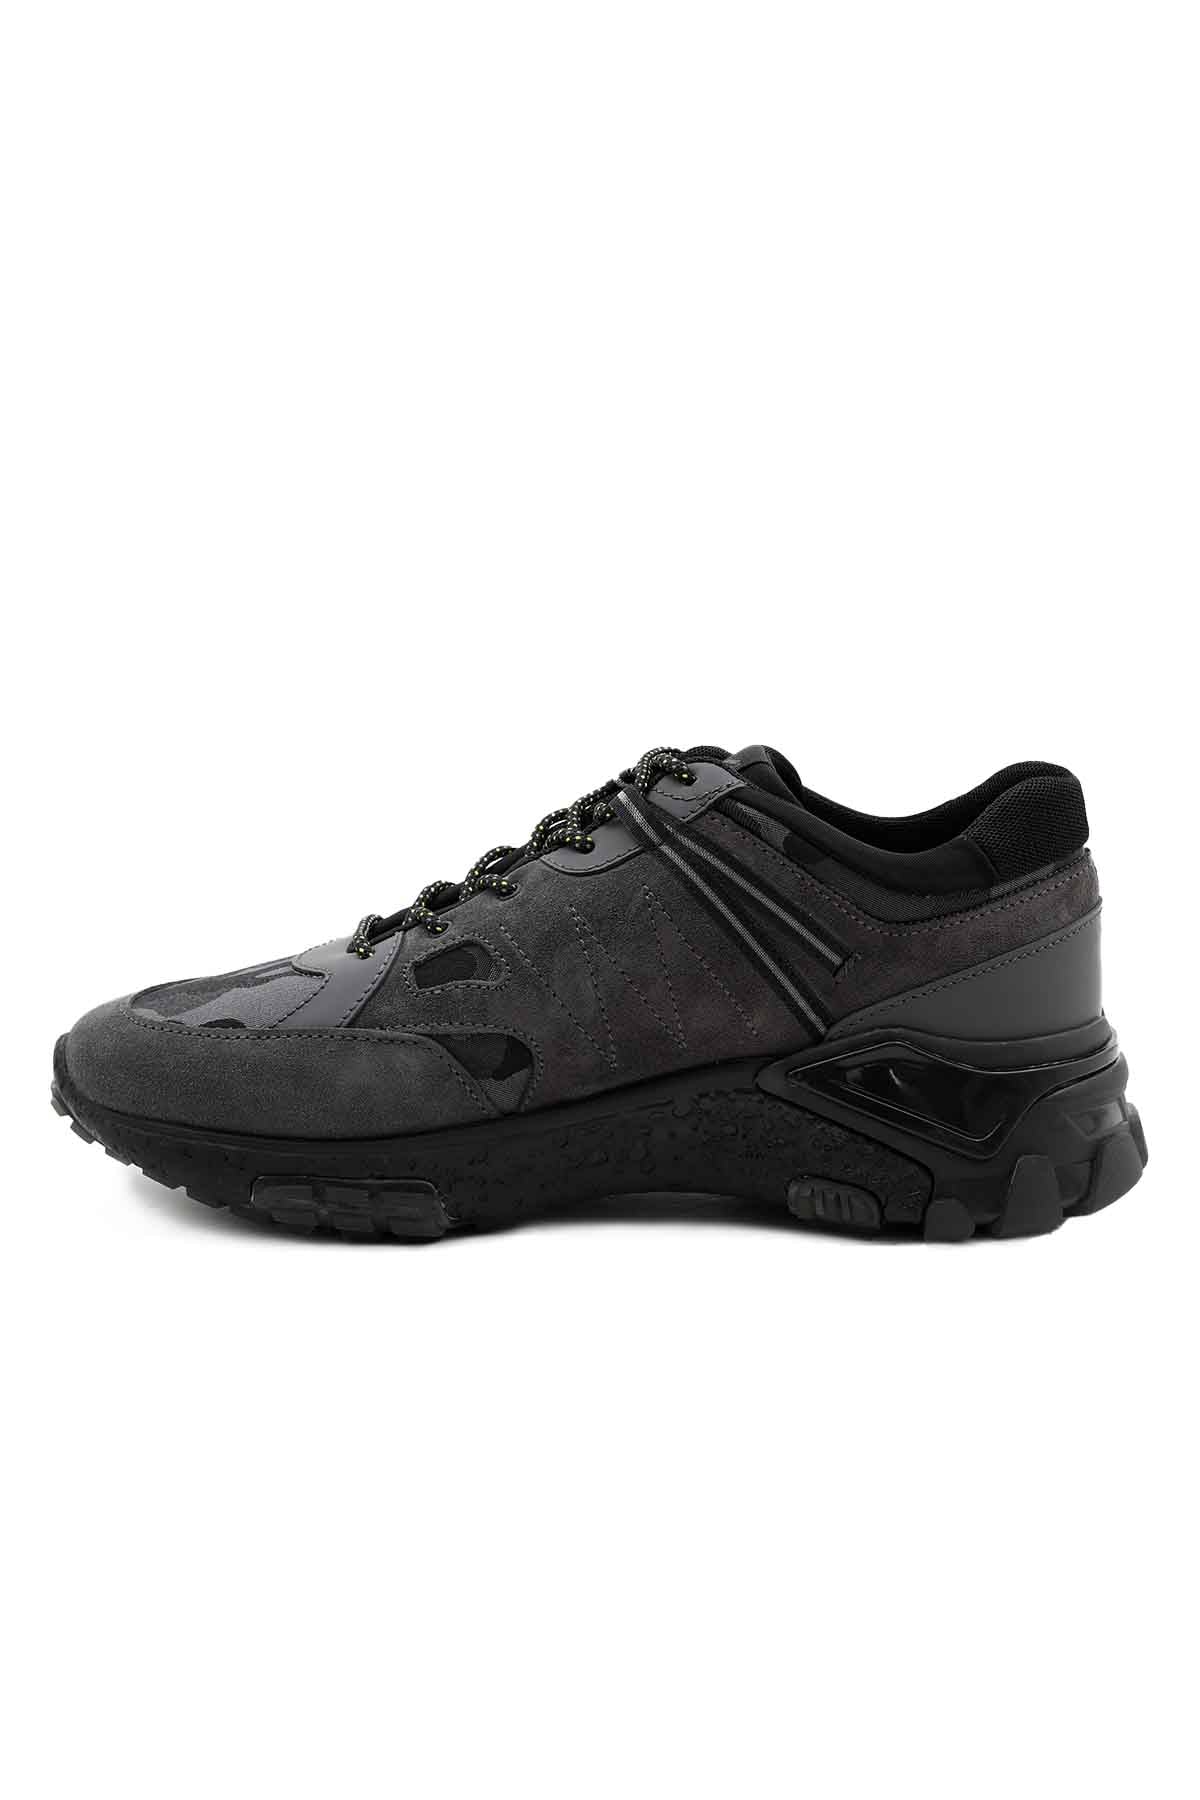 Hogan Urban Trek Kamuflaj Sneaker Ayakkabı-Libas Trendy Fashion Store